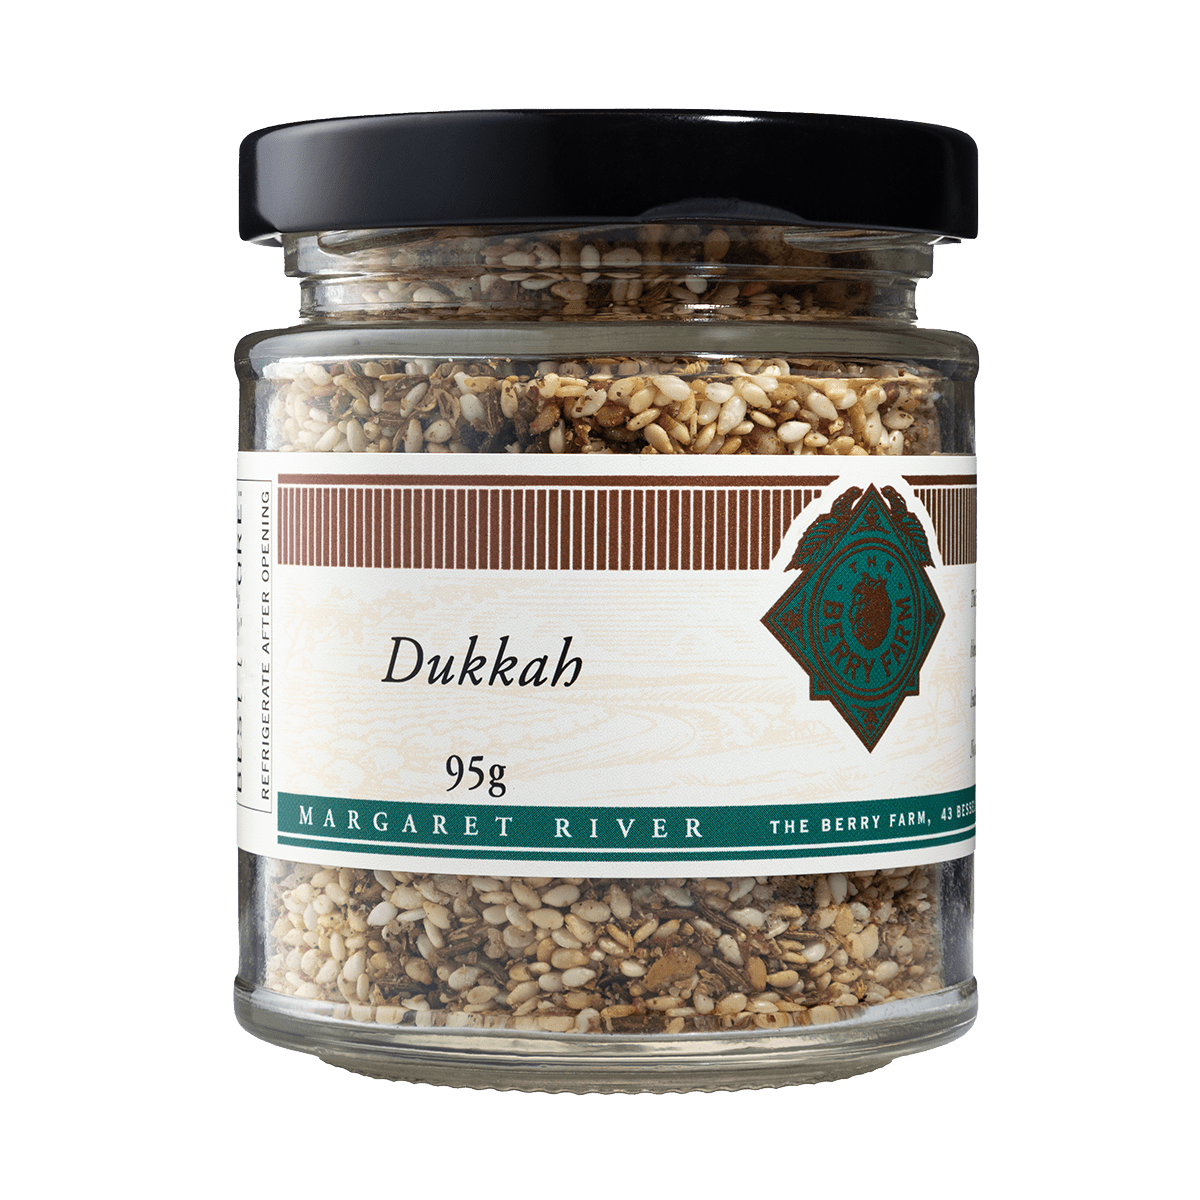 A jar of Dukkah